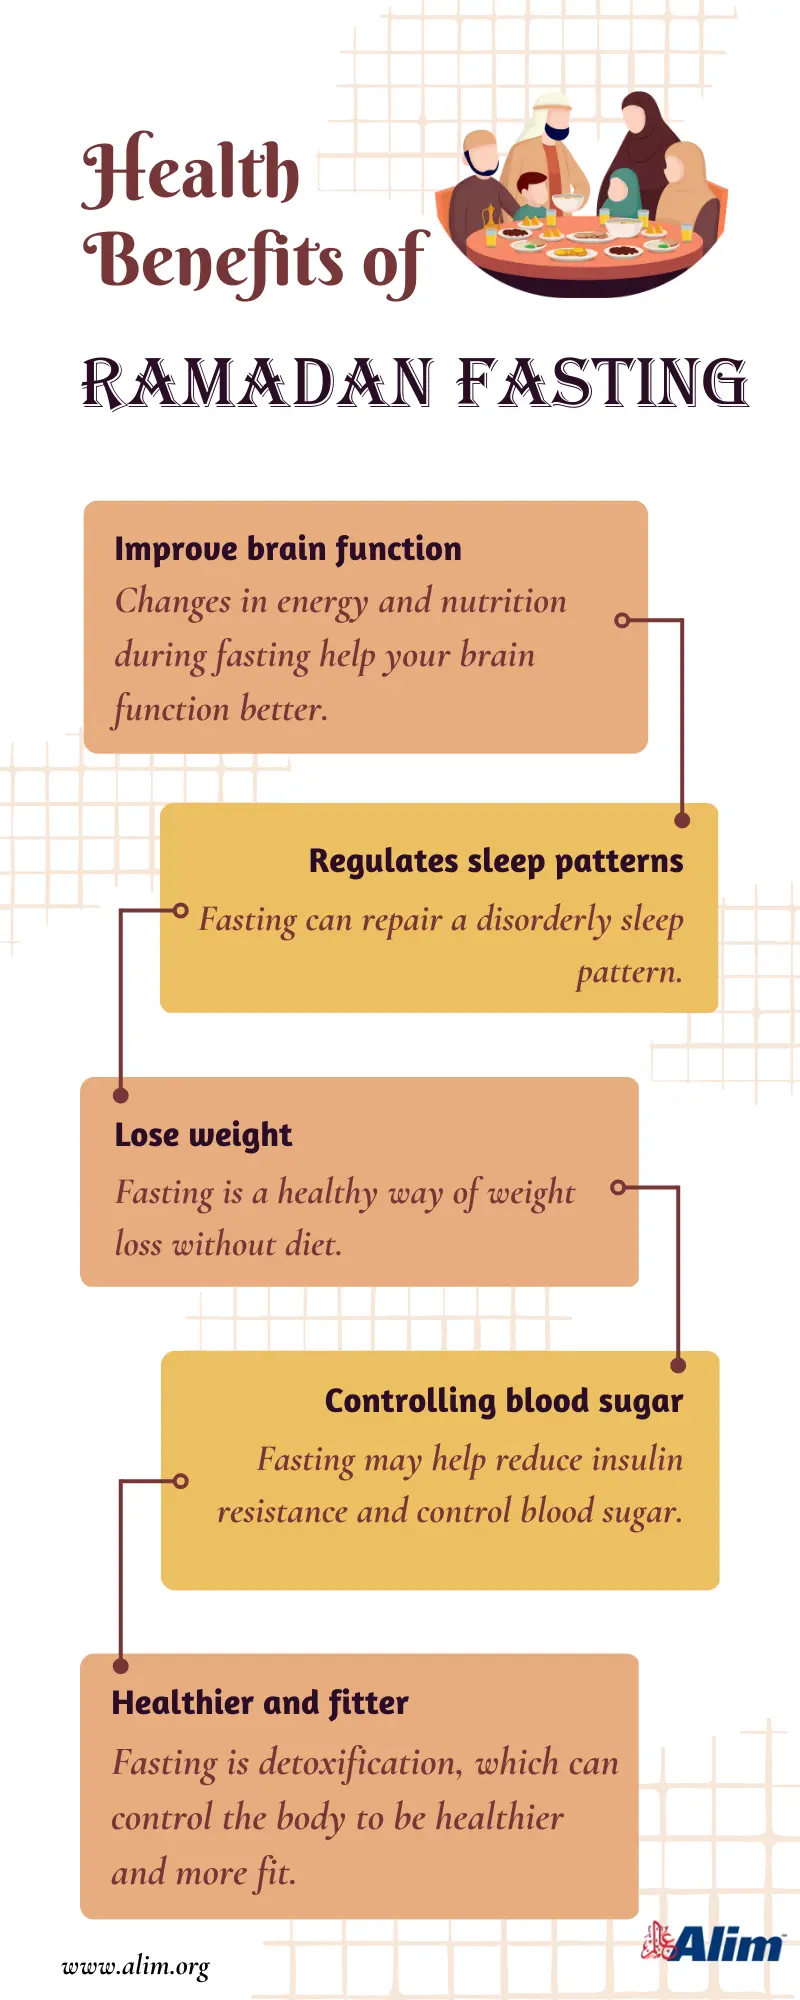 Health Benefits of RAMADAN FASTING